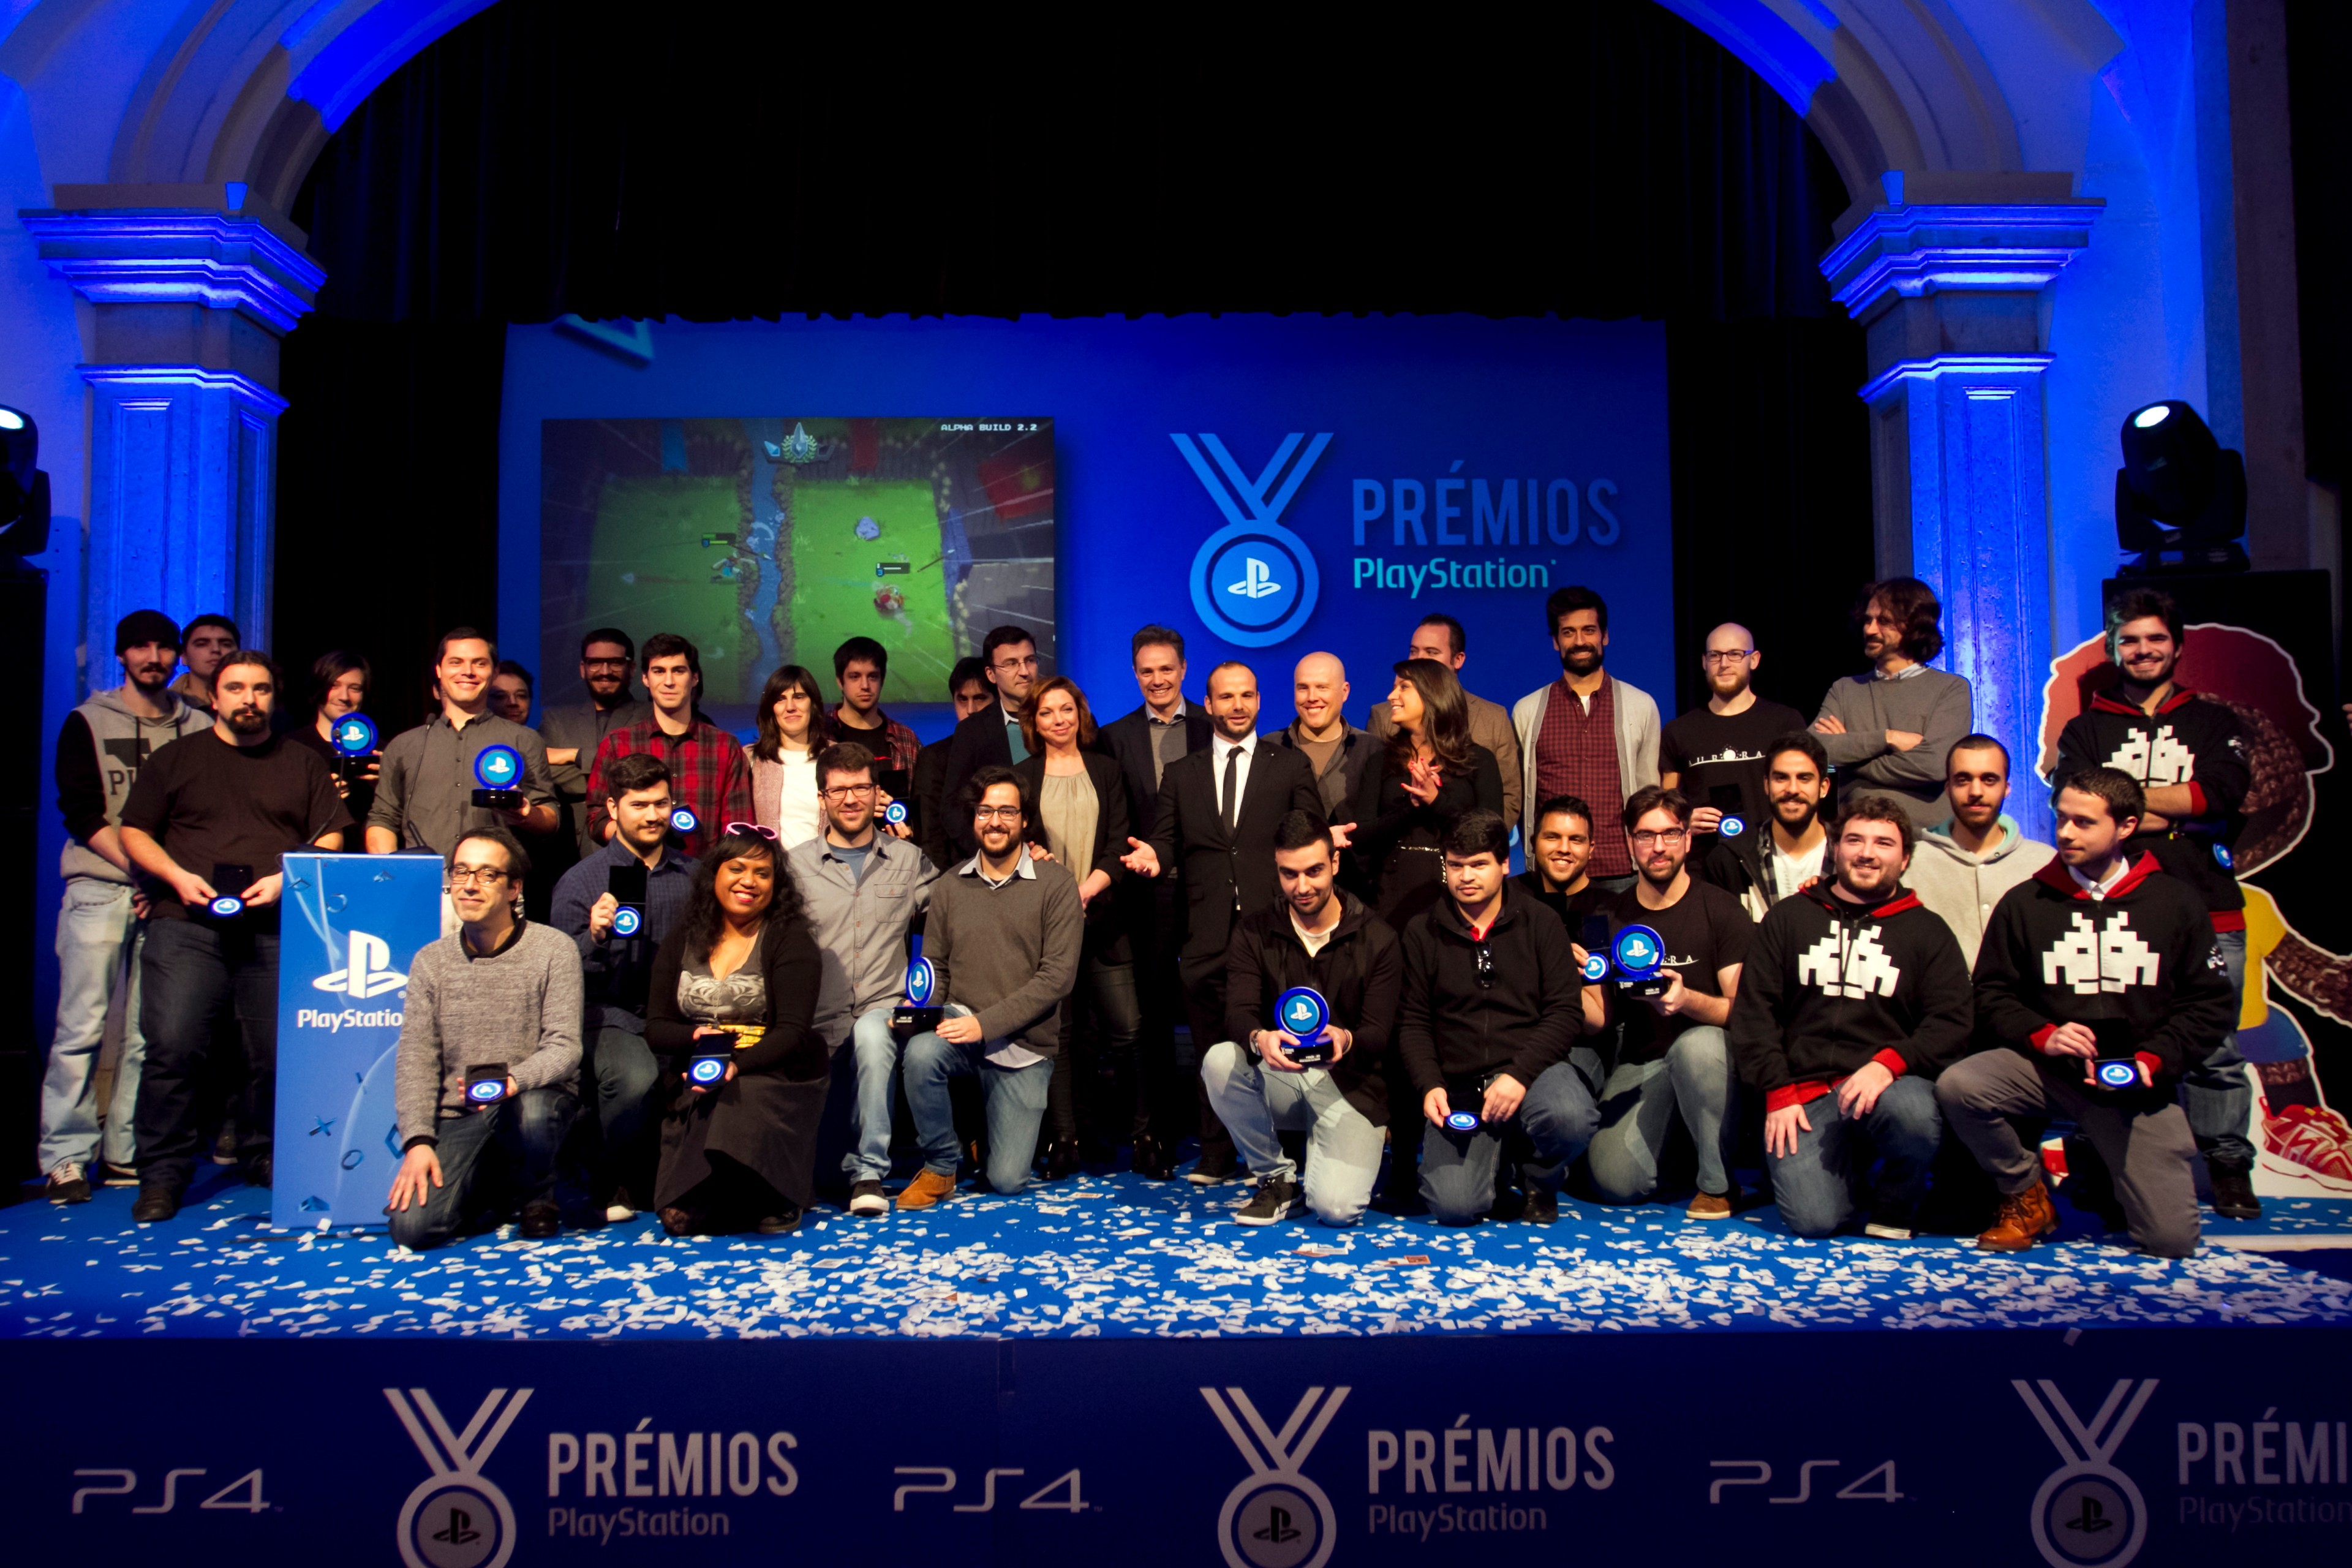 Premios PlayStation V